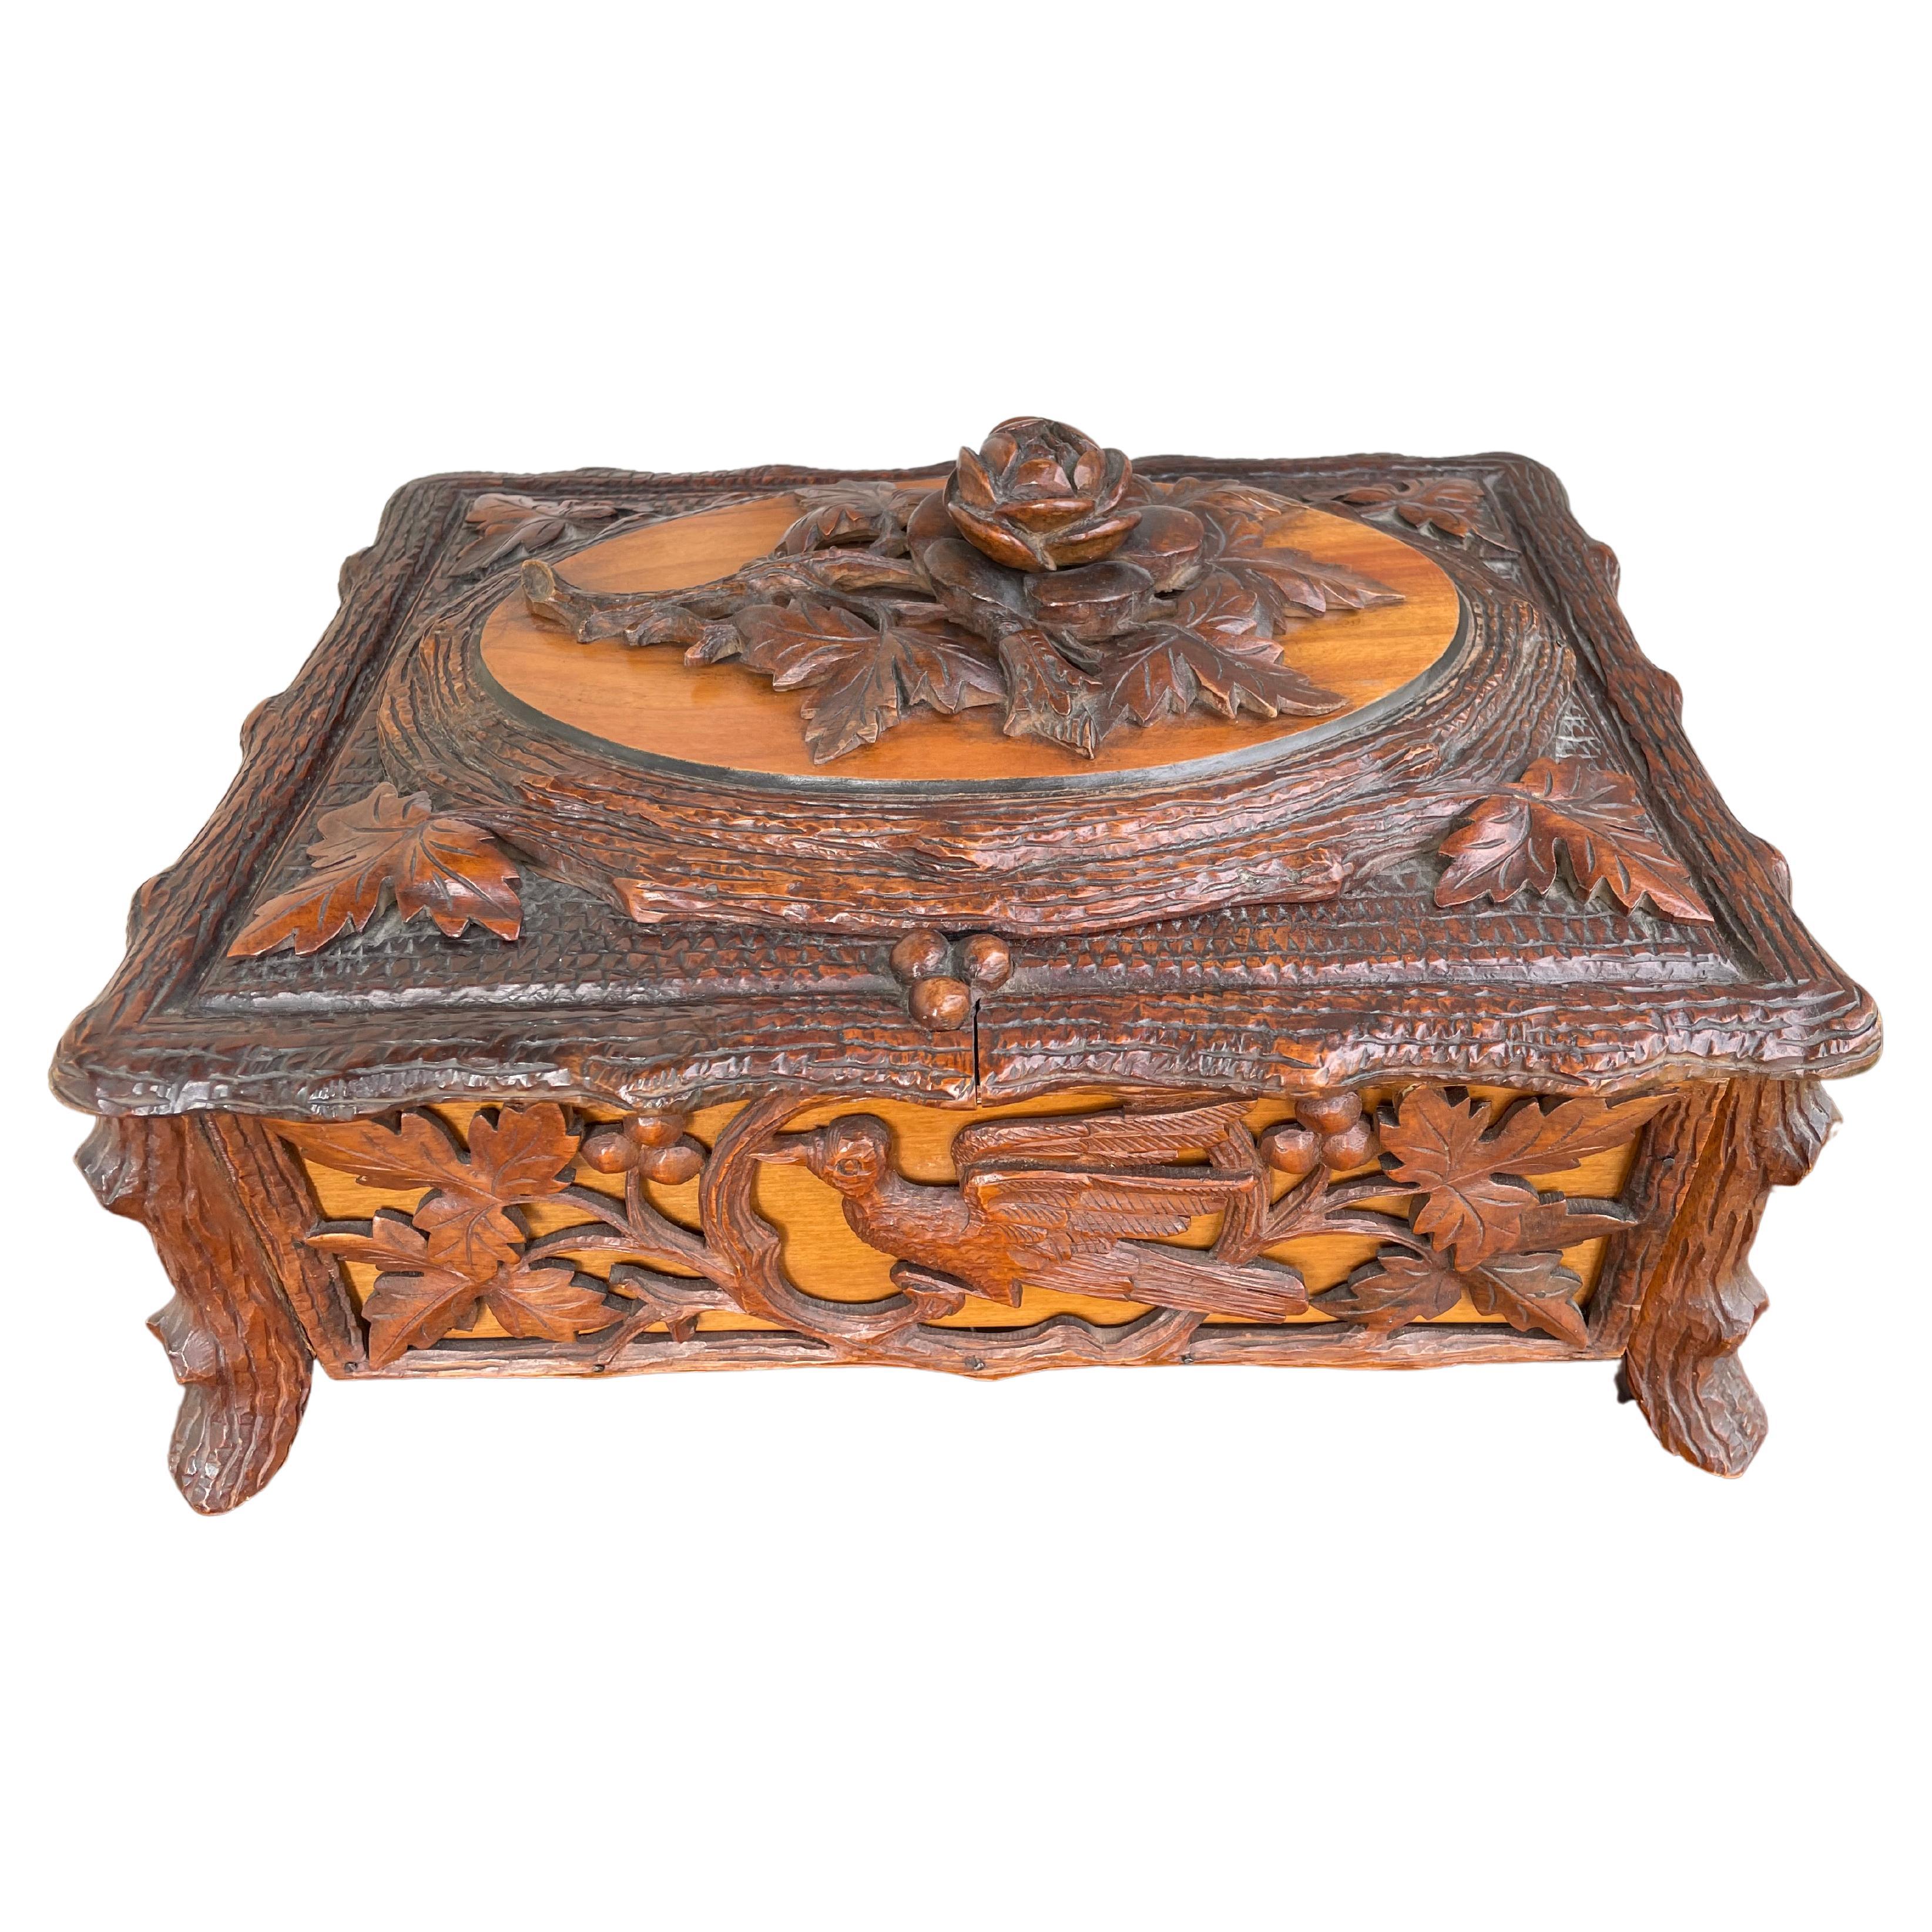 Stunning Antique Hand Carved Nutwood Black Forest Box with Secret Lock Mechanism